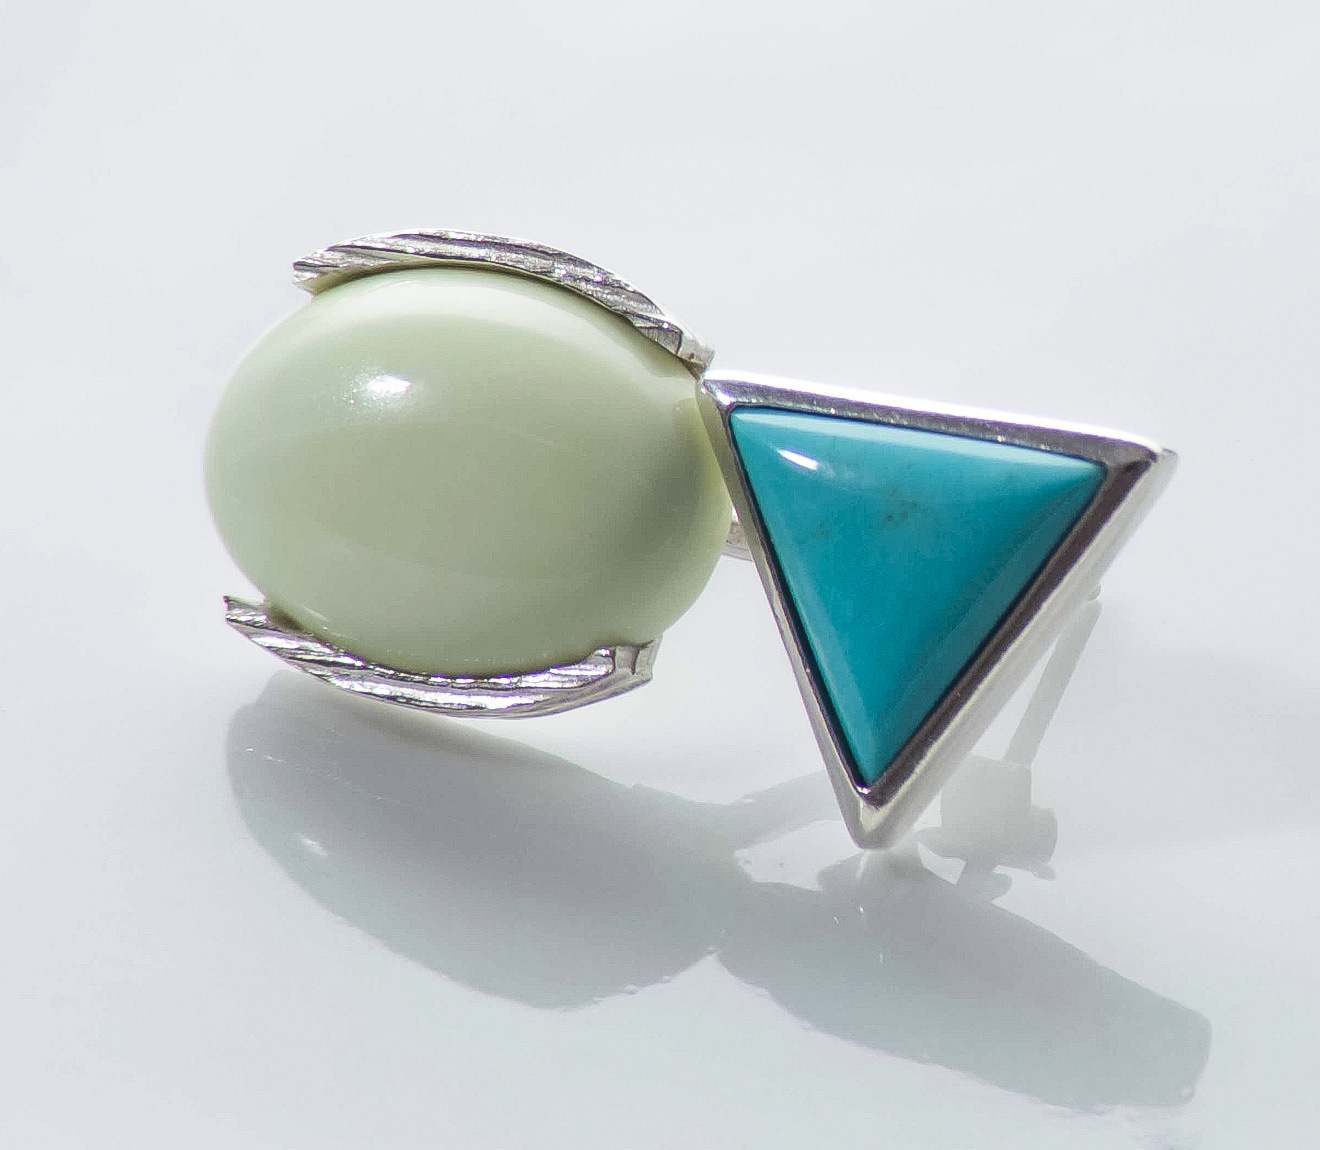 Triangular dualpurpose earrings,front view,crisolemon,turquoise